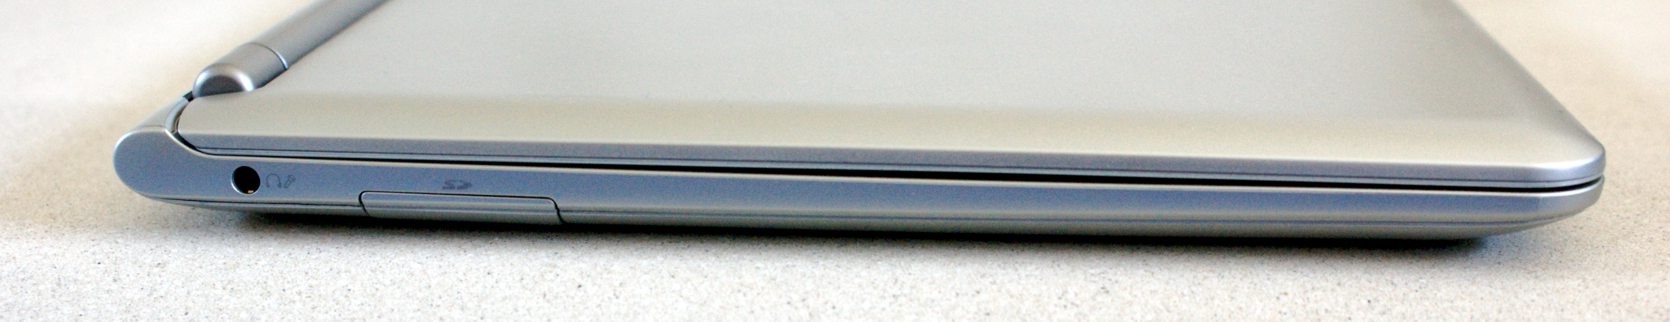 SamsungXE303C12 Side View